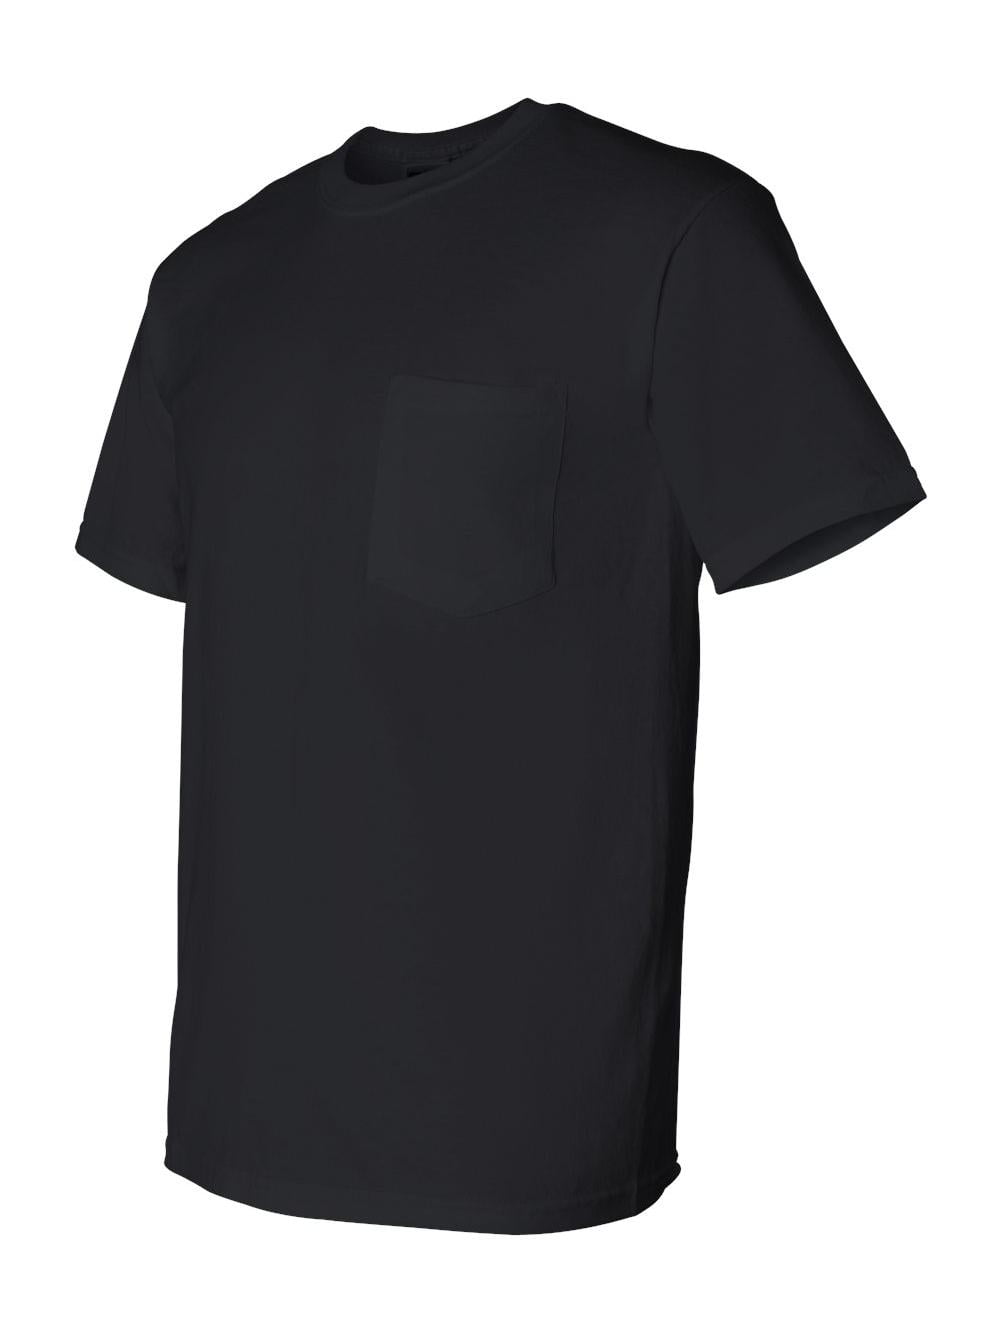 Gildan - DryBlend Pocket T-Shirt - 8300 - Walmart.com